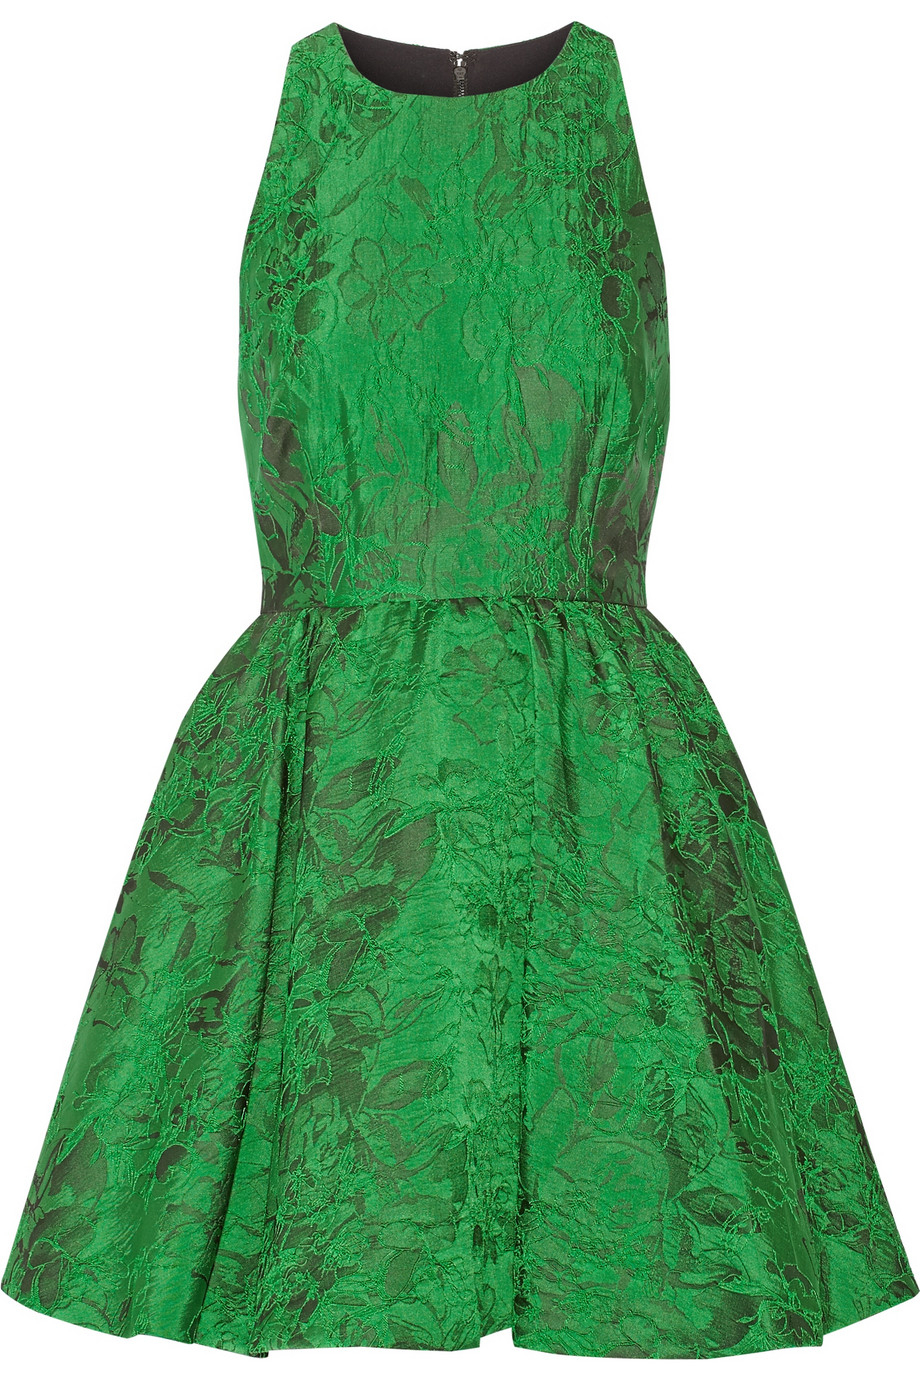 Lyst - Alice + Olivia Tevin Jacquard Mini Dress in Green